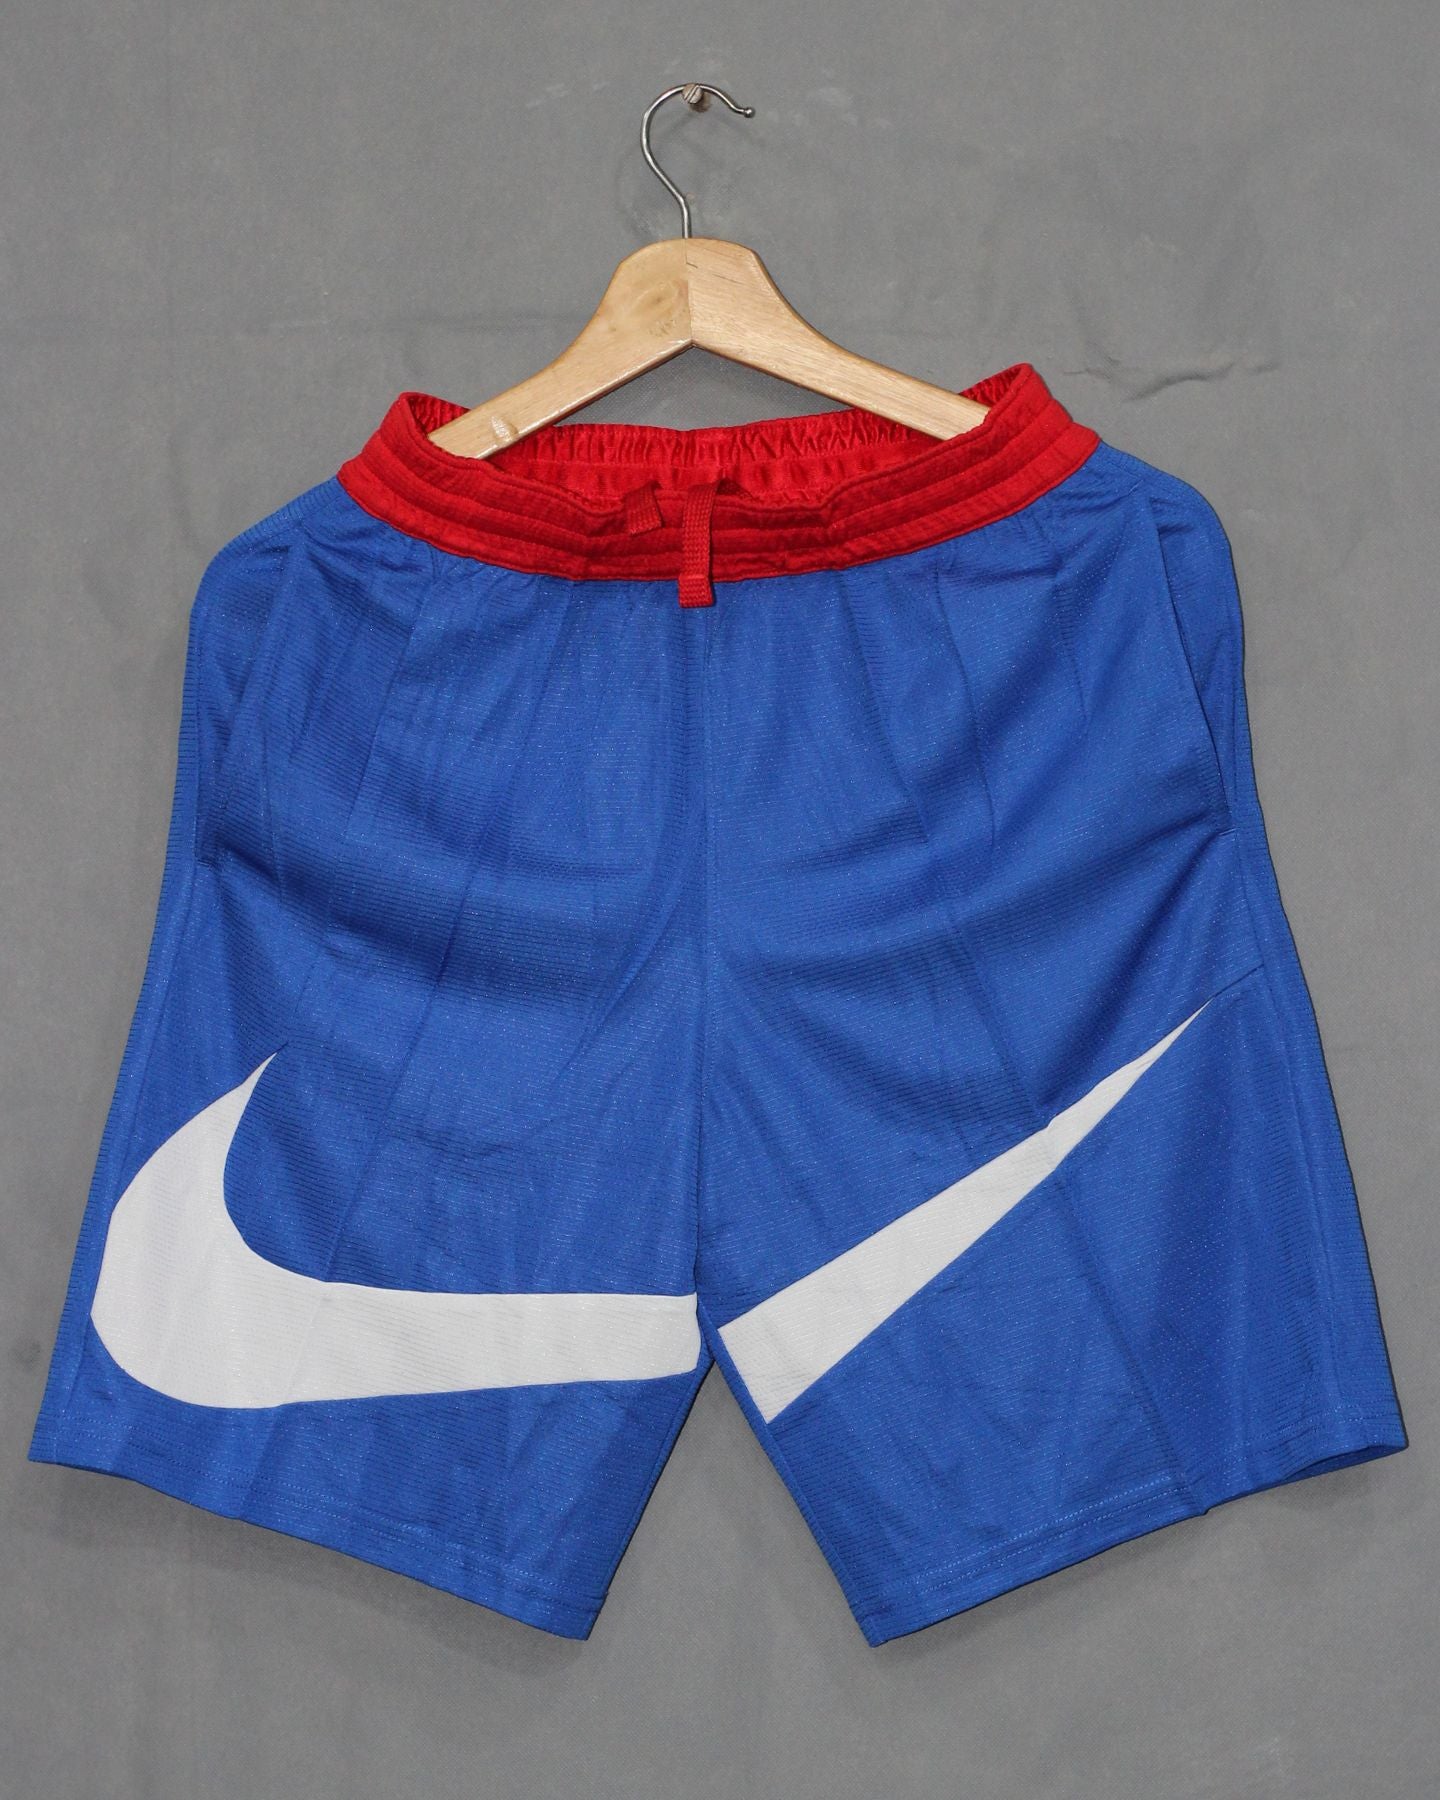 Nike Dri-Fit Branded Original Sports Soccer Short For Men